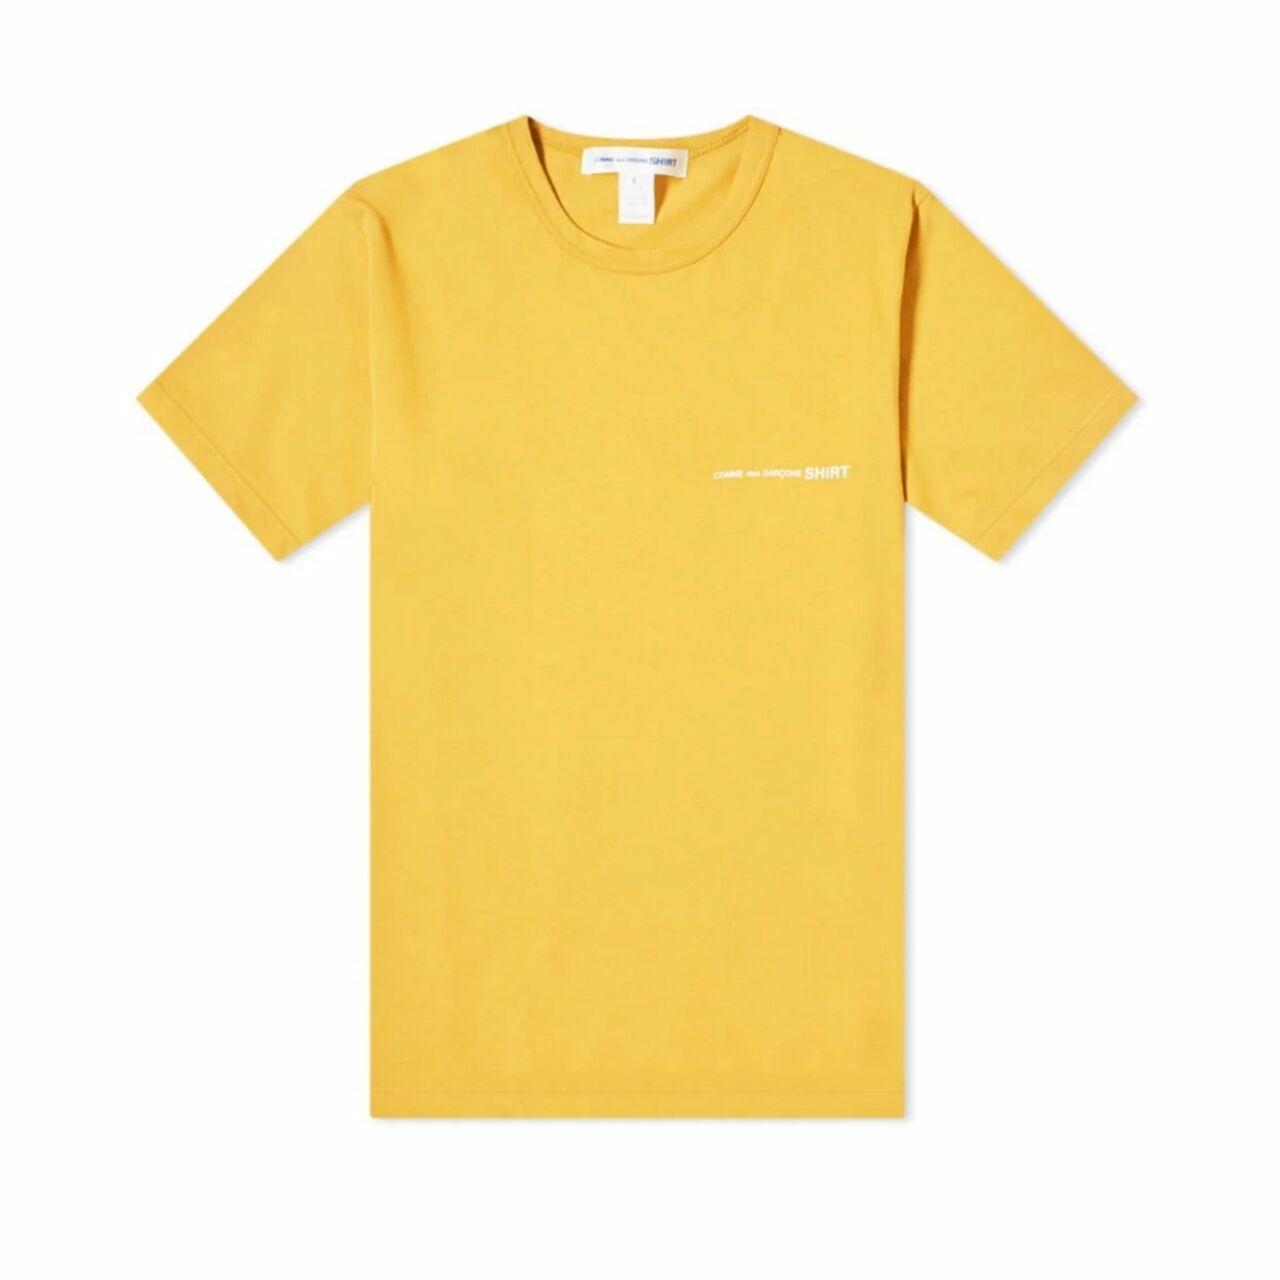 Comme des Garcons Mustard Basic T-Shirt